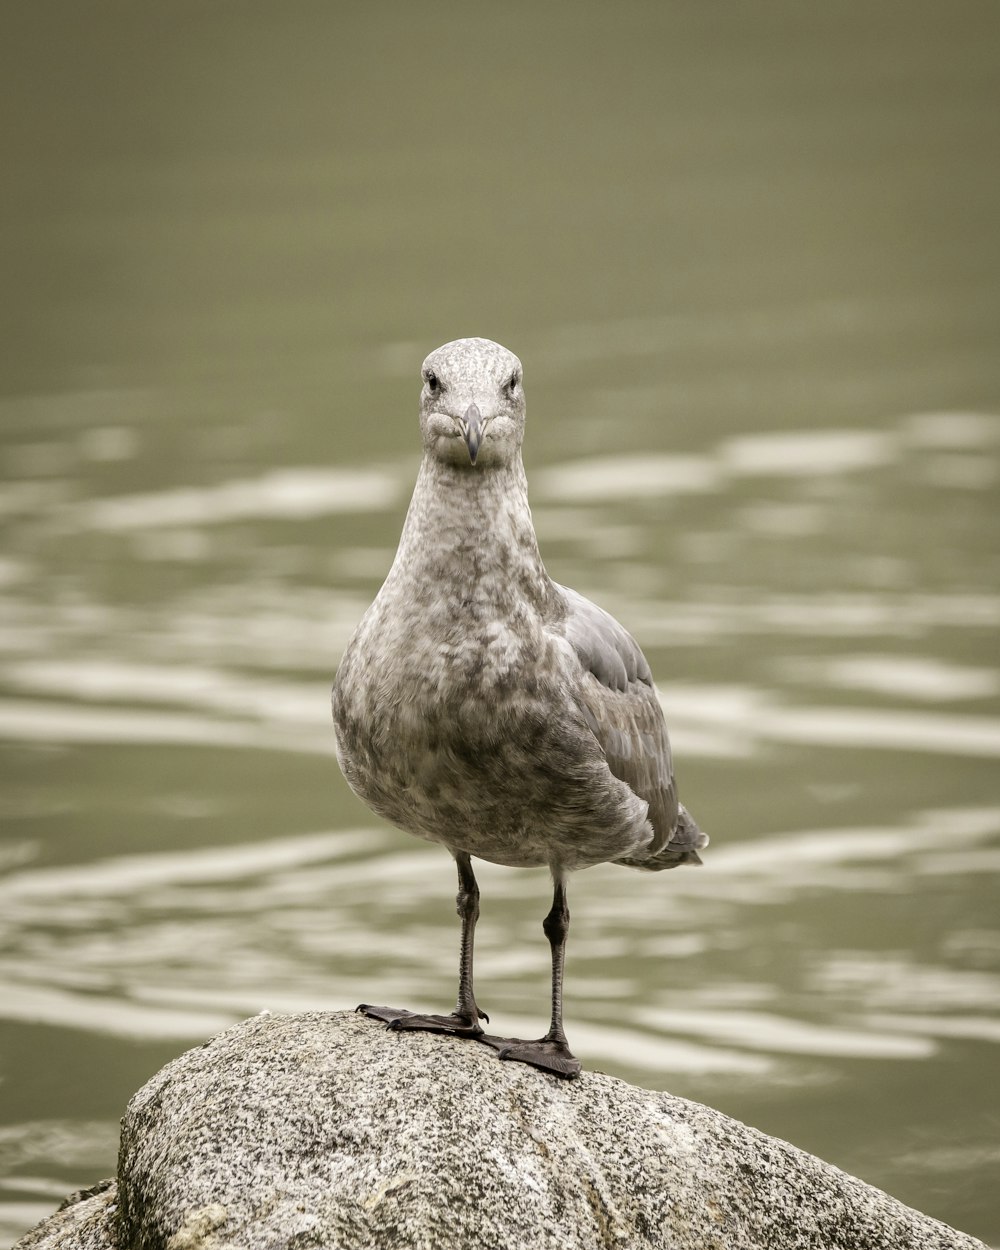 brown bird on brown rock near body of water during daytime